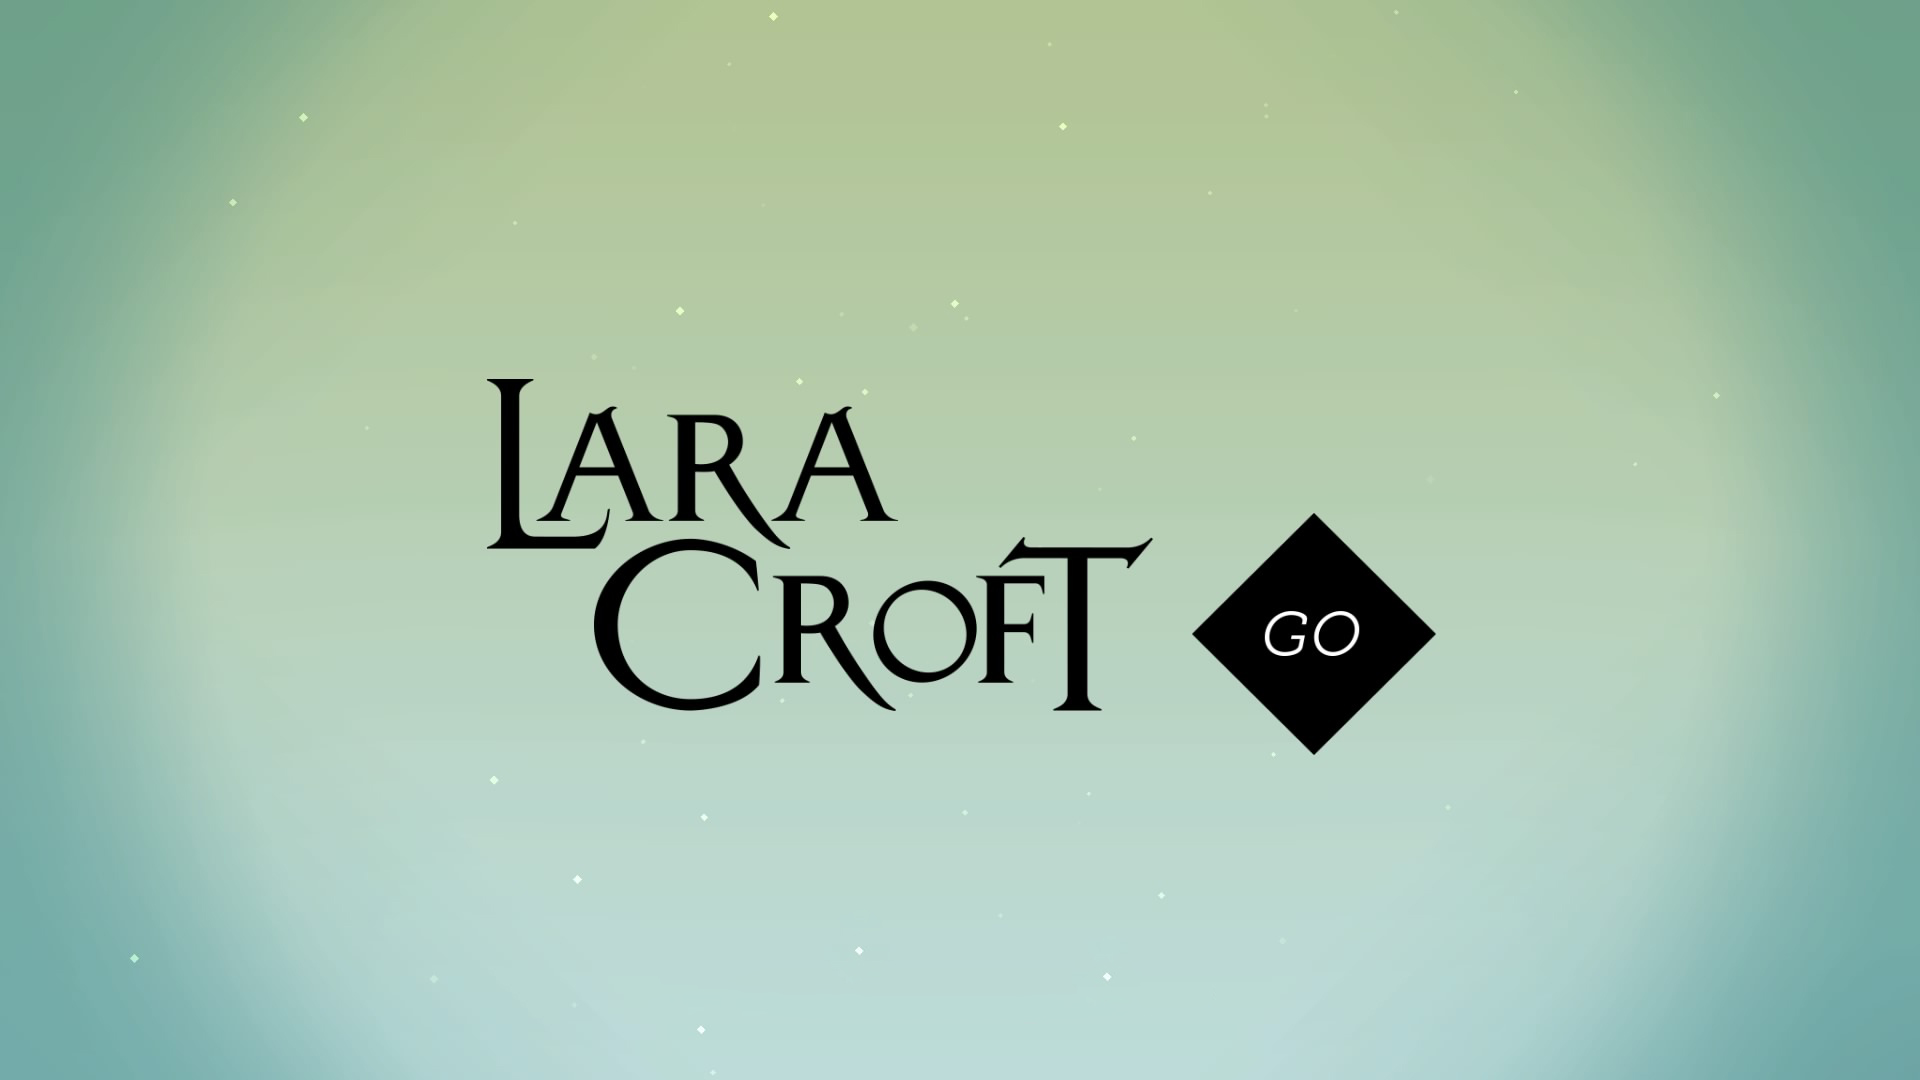 General 1920x1080 Lara Croft GO Tomb Raider PlayStation PlayStation 4 Mobile Game video games Lara Croft (Tomb Raider) video game characters